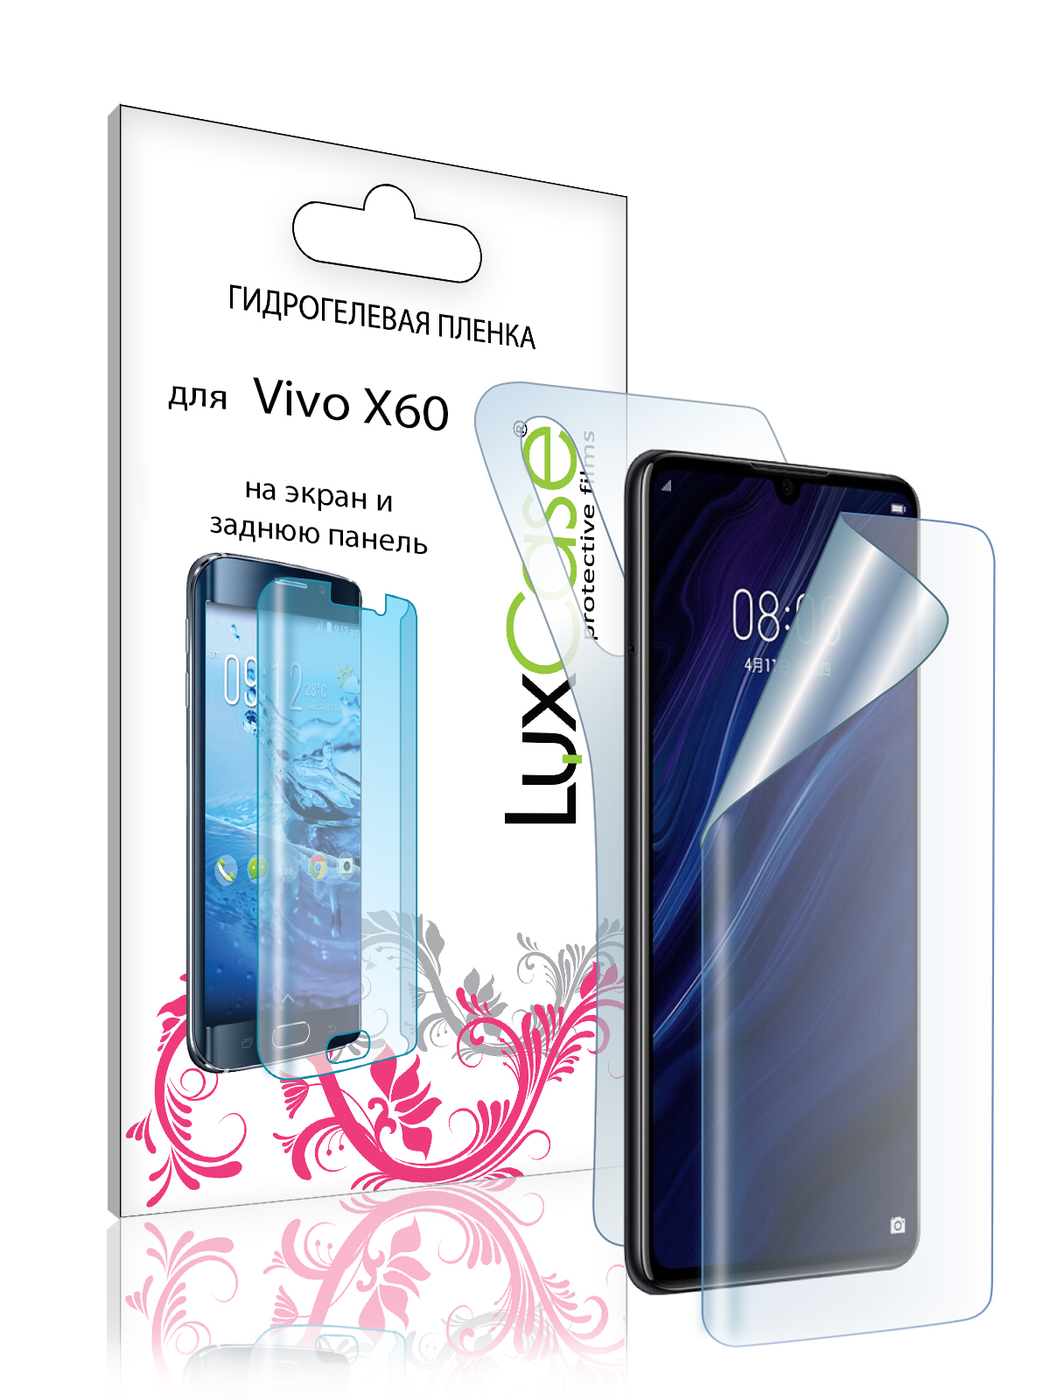 Пленка гидрогелевая LuxCase для Vivo X60 Front and Back 0.14mm Transparent 86006 гидрогелевая пленка luxcase для vivo x60 pro front and back 0 14mm transparent 86003